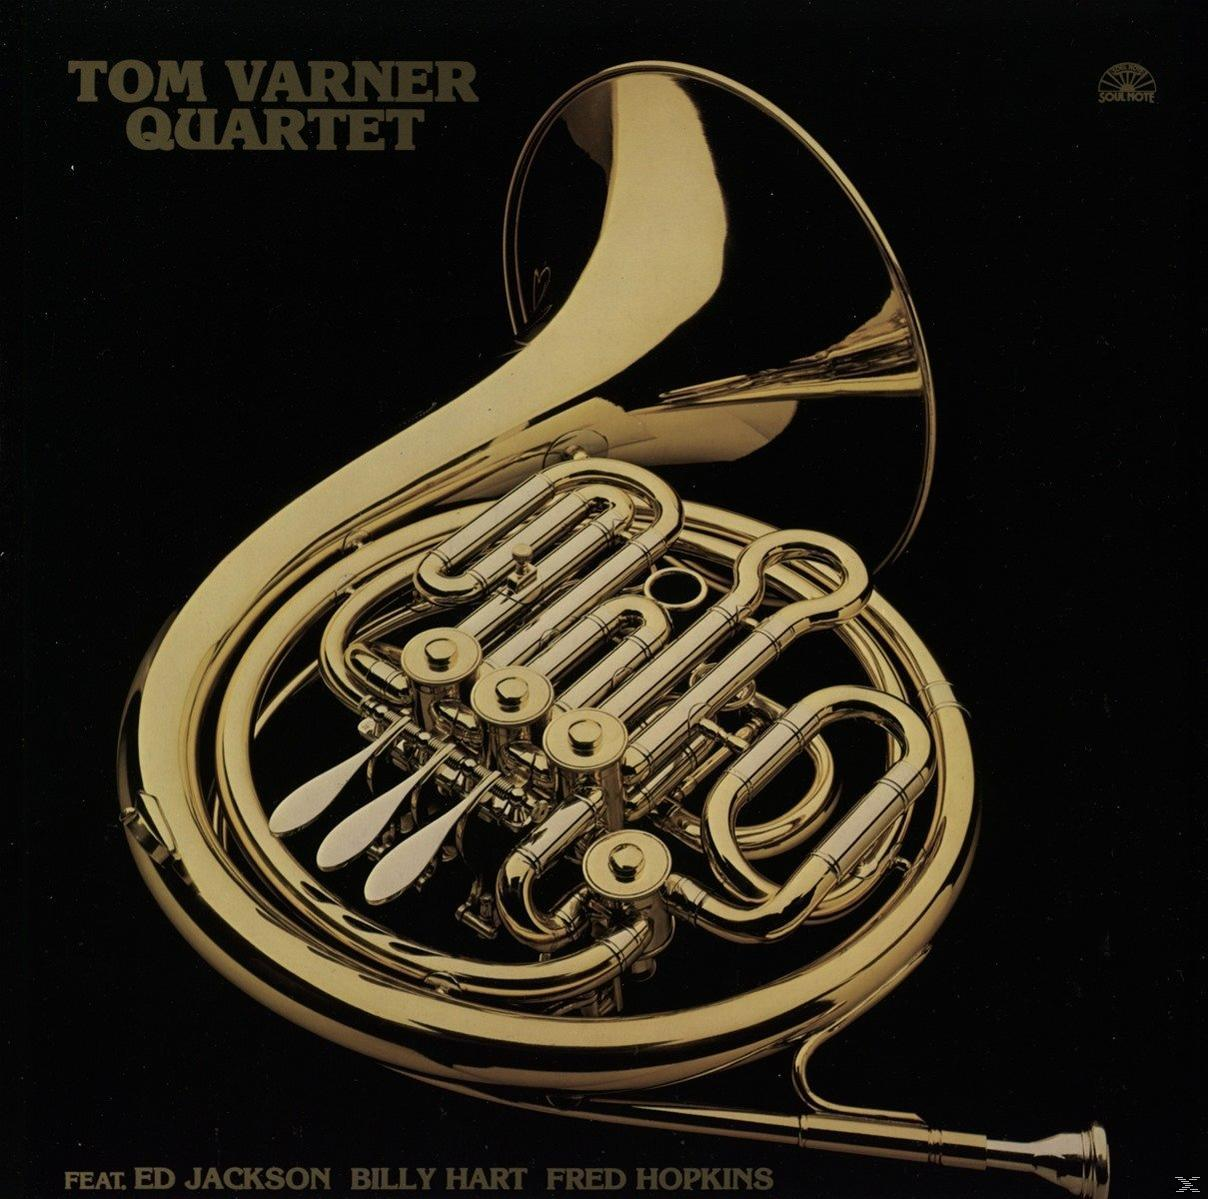 - (Vinyl) TV Quartet Tom Varner -